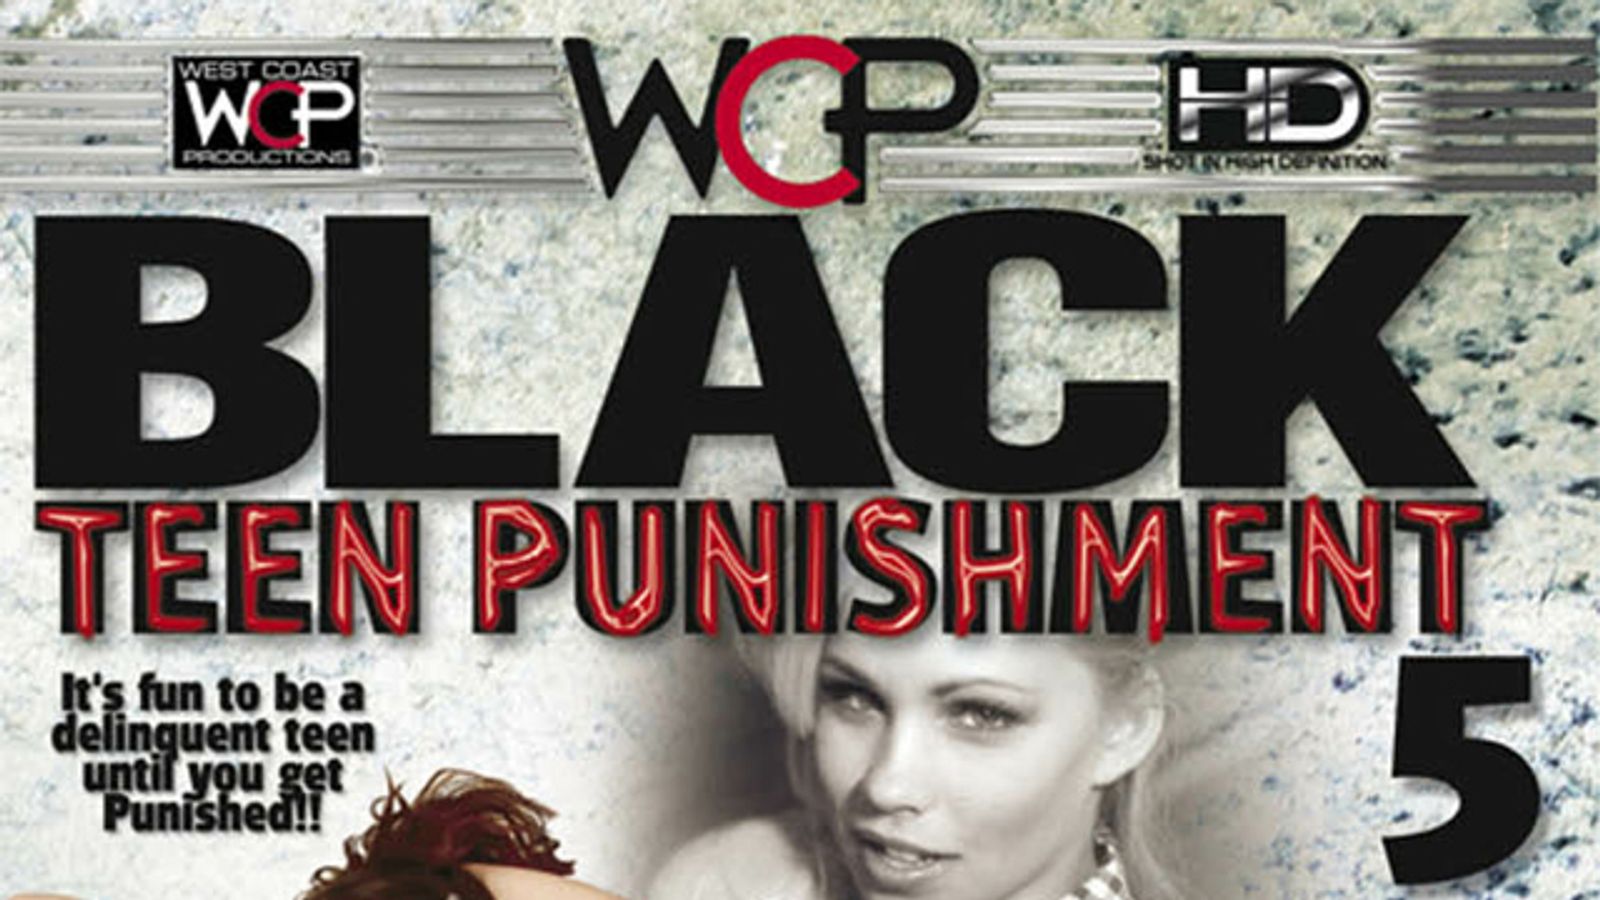 West Coast Productions Streets 'Black Teen Punishment 5'